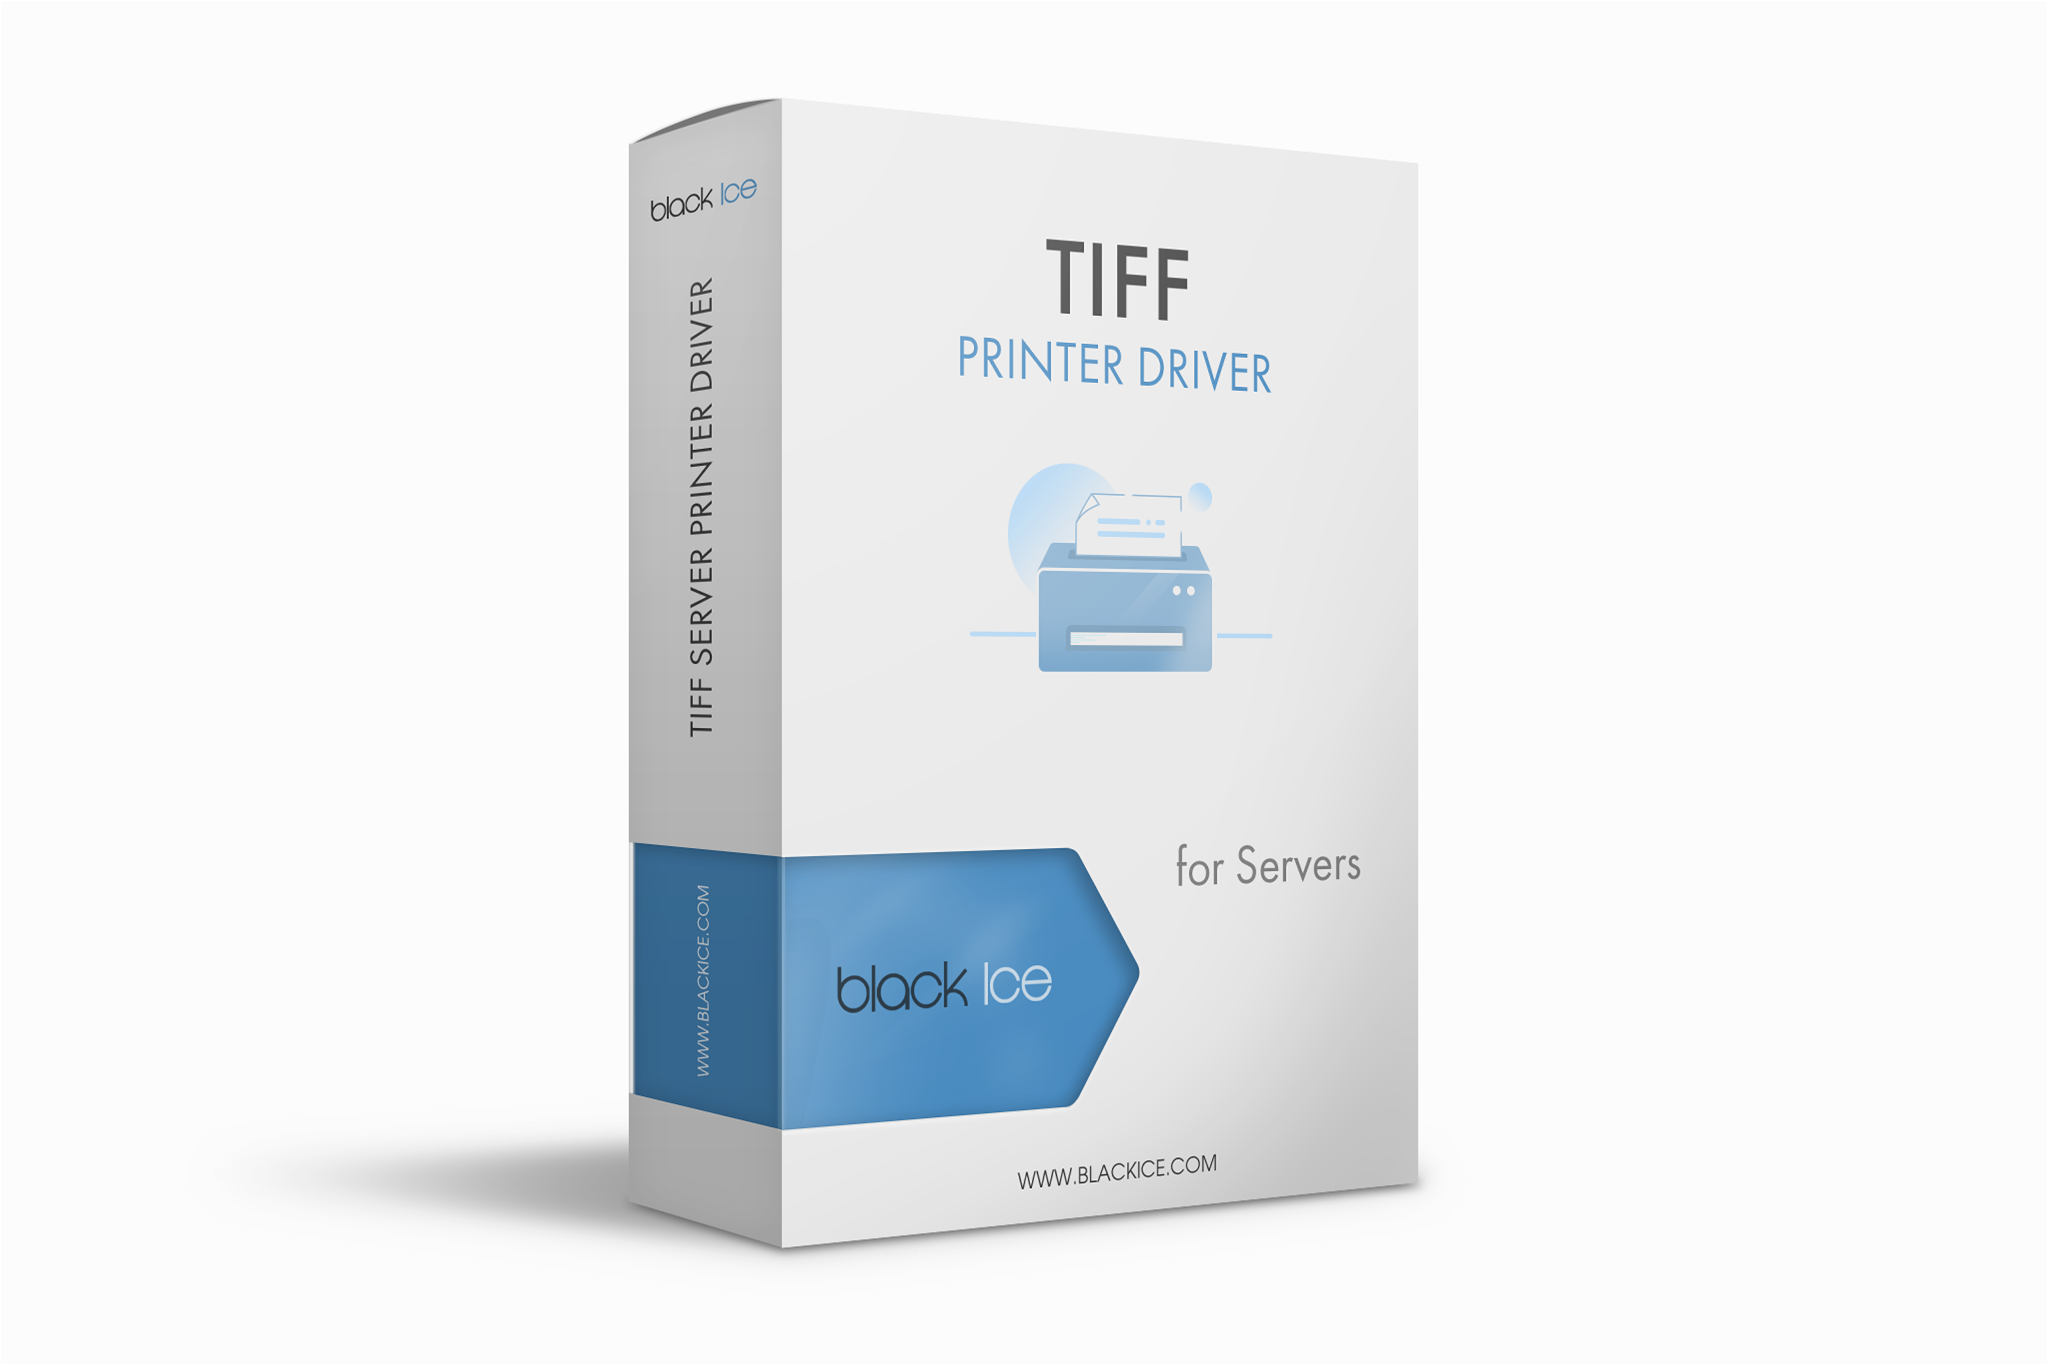 TIFF/Monochrome Printer Driver Server Subscription (2 Servers)